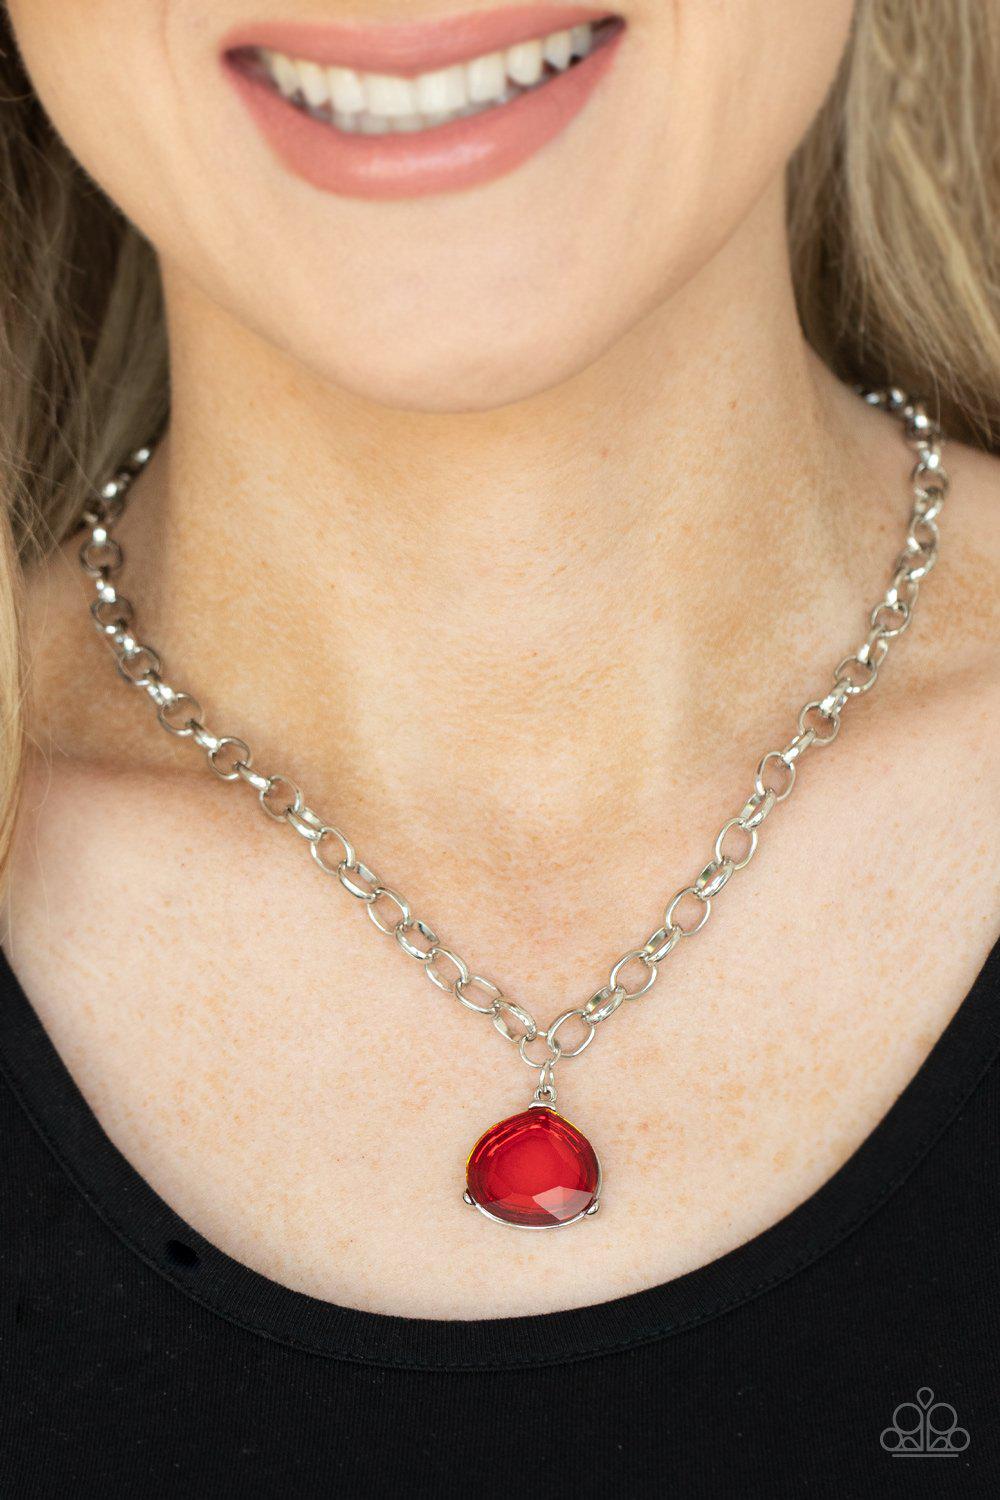 Gallery Gem Red Rhinestone Necklace - Paparazzi Accessories- model - CarasShop.com - $5 Jewelry by Cara Jewels